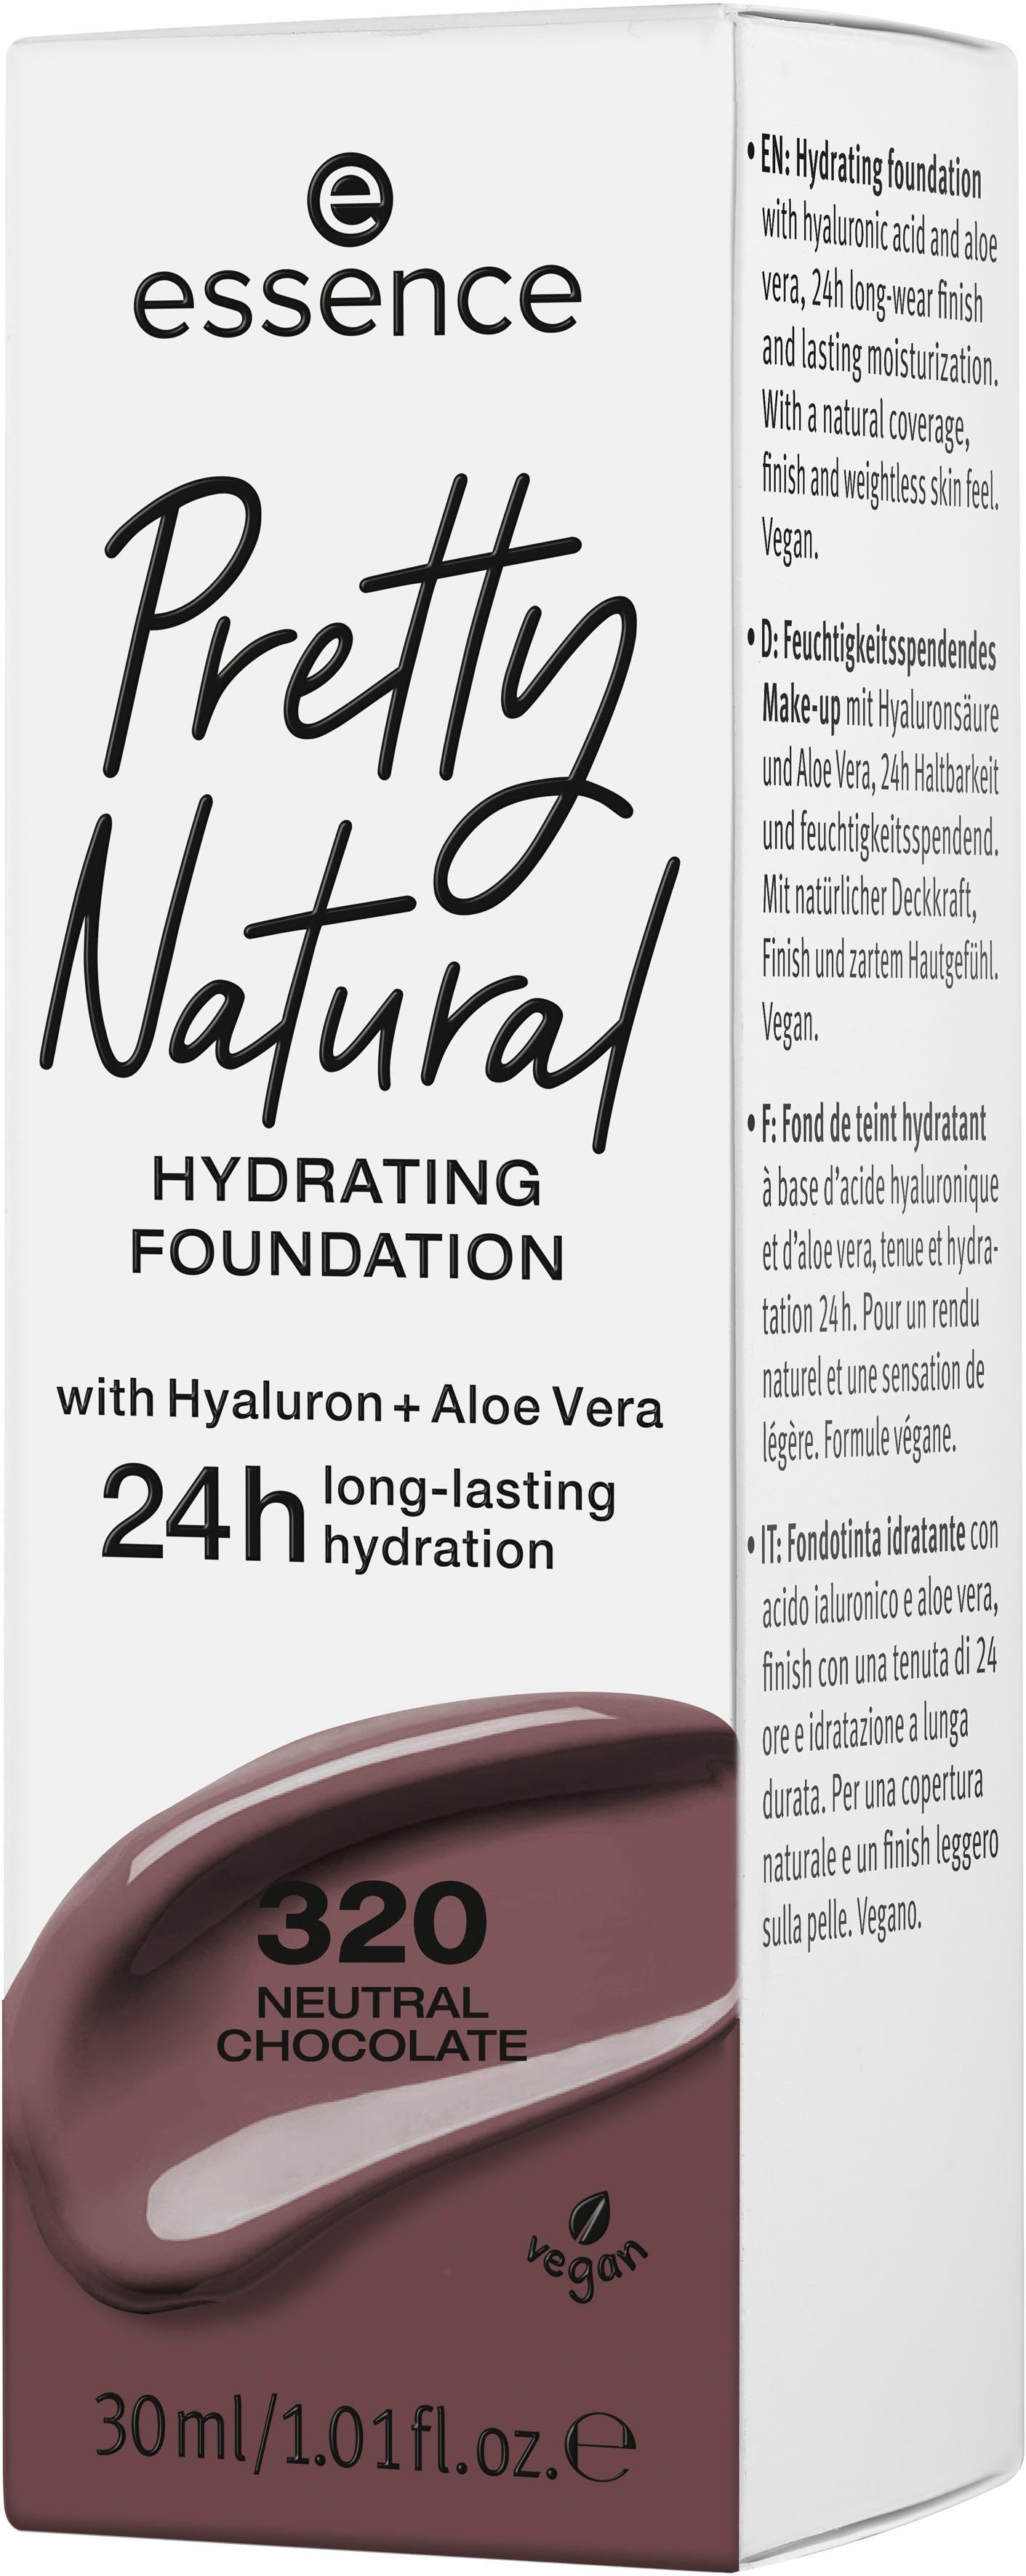 Essence Foundation Pretty Natural HYDRATING, Chocolate Neutral 3-tlg